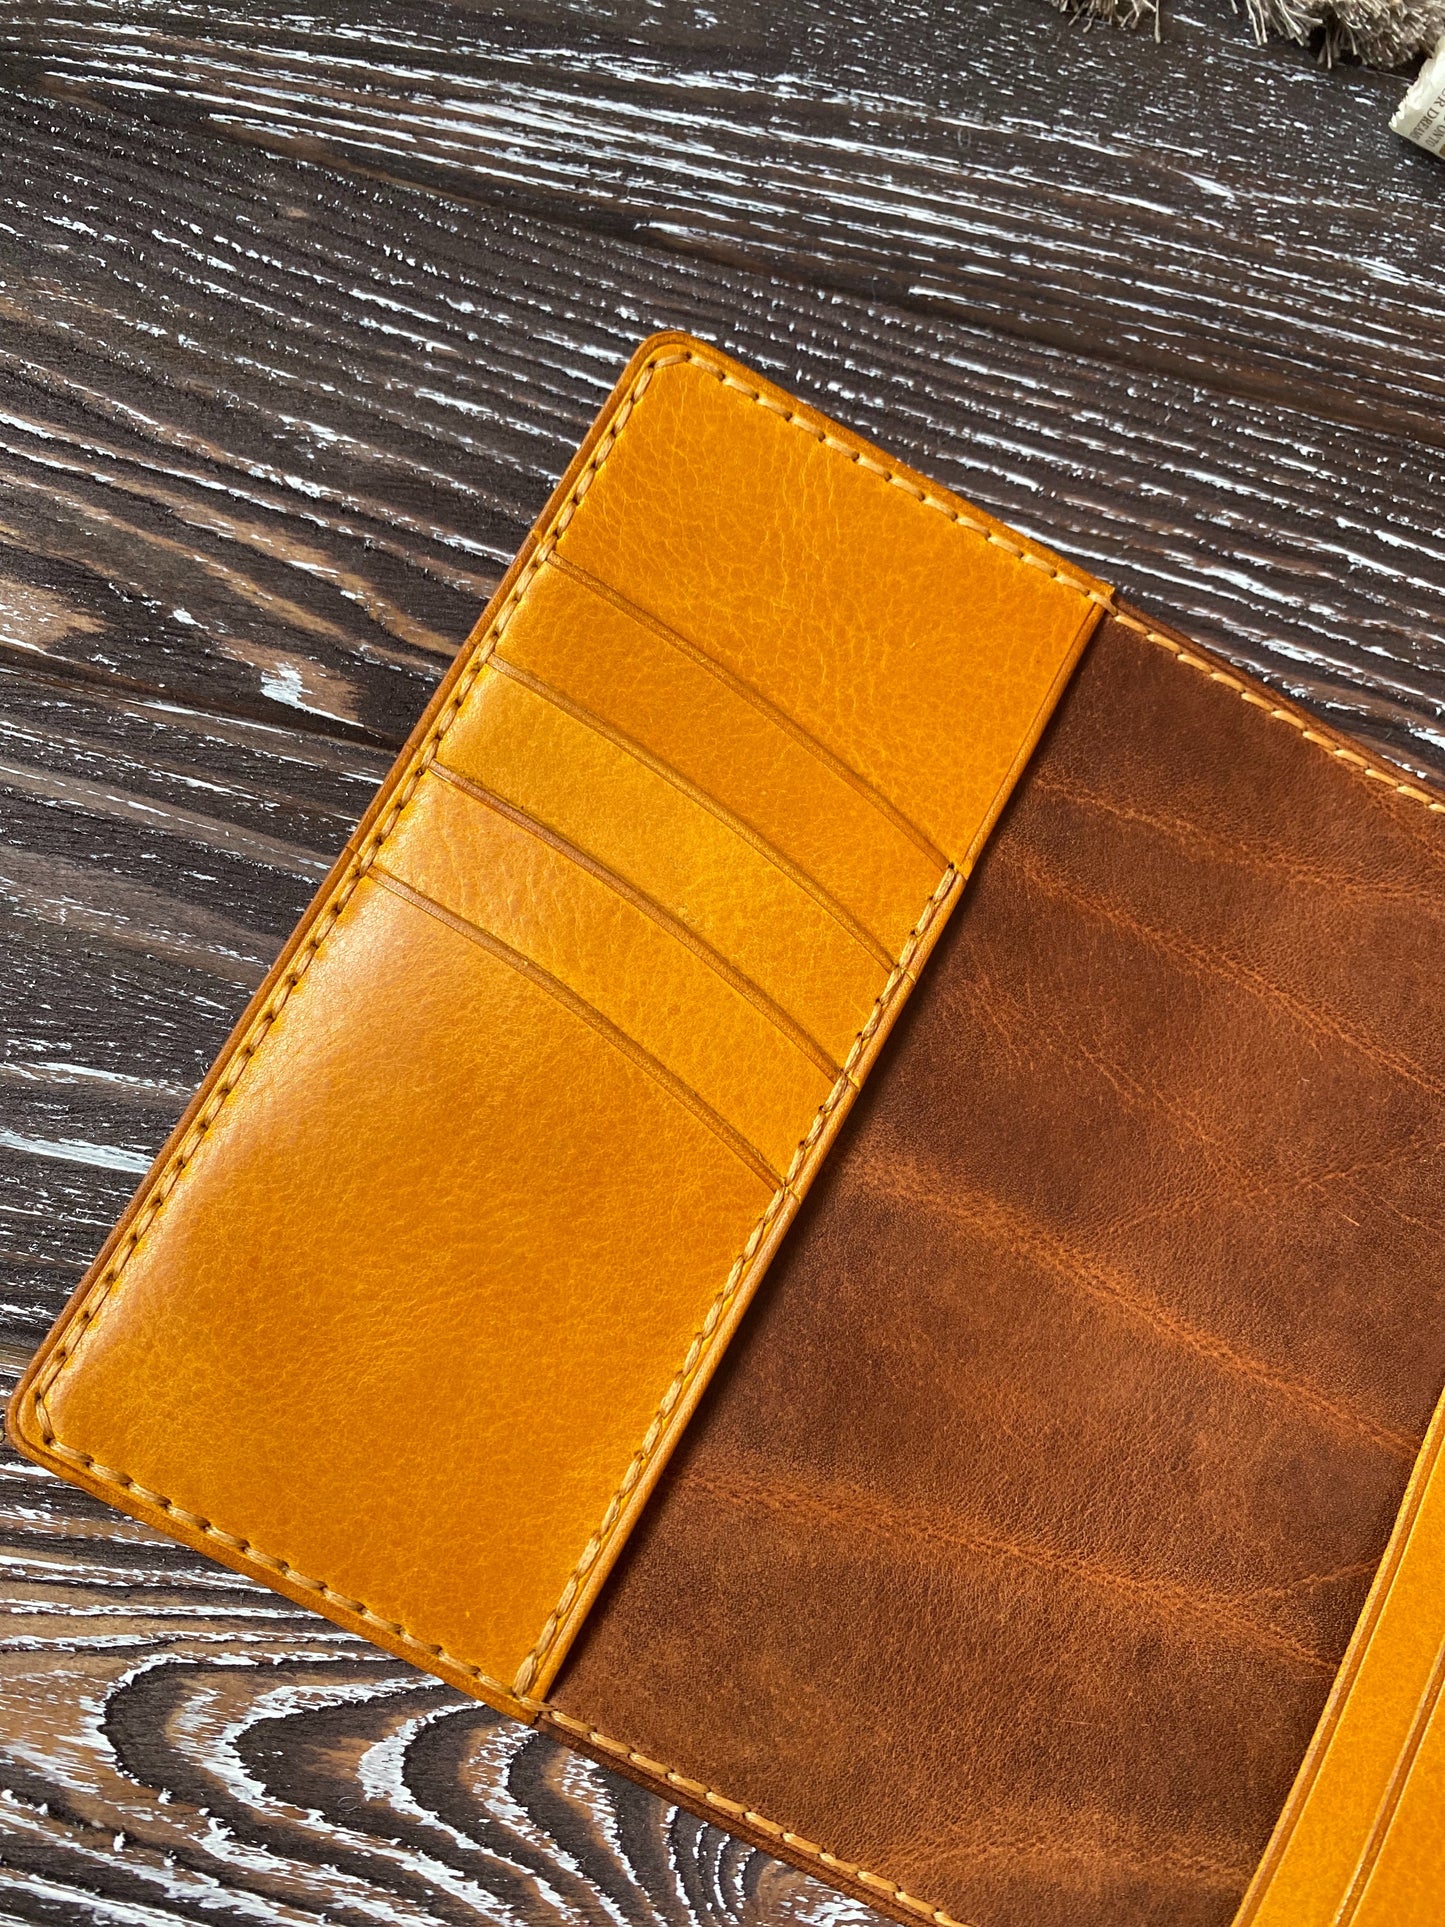 Moleskine Pocket TN leather cover